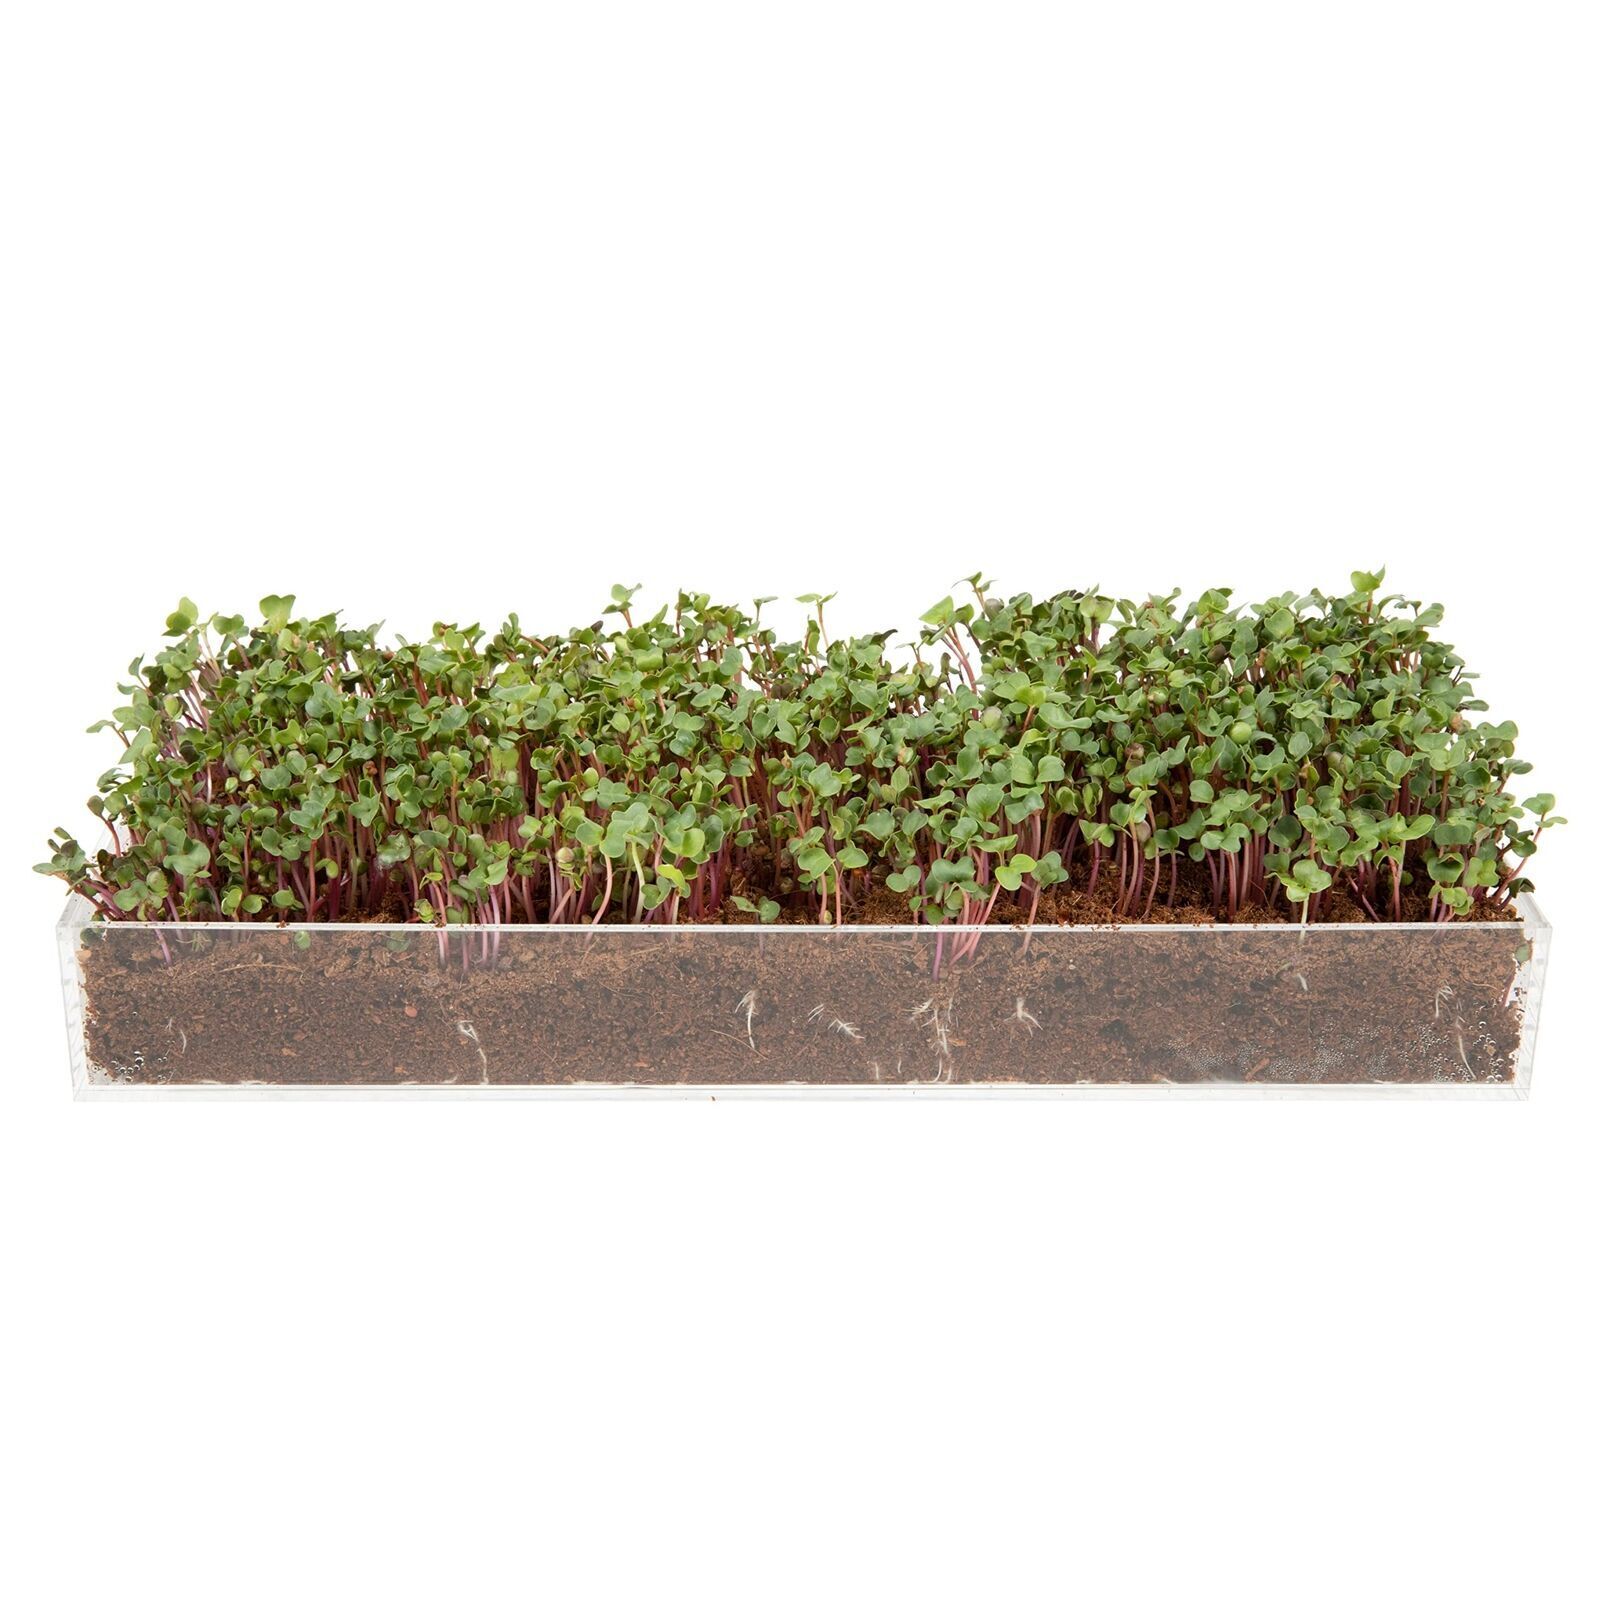 Microgreens Grow Kit - Includes Microgreen Seeds, Fiber Soil, Acrylic Growing Tr